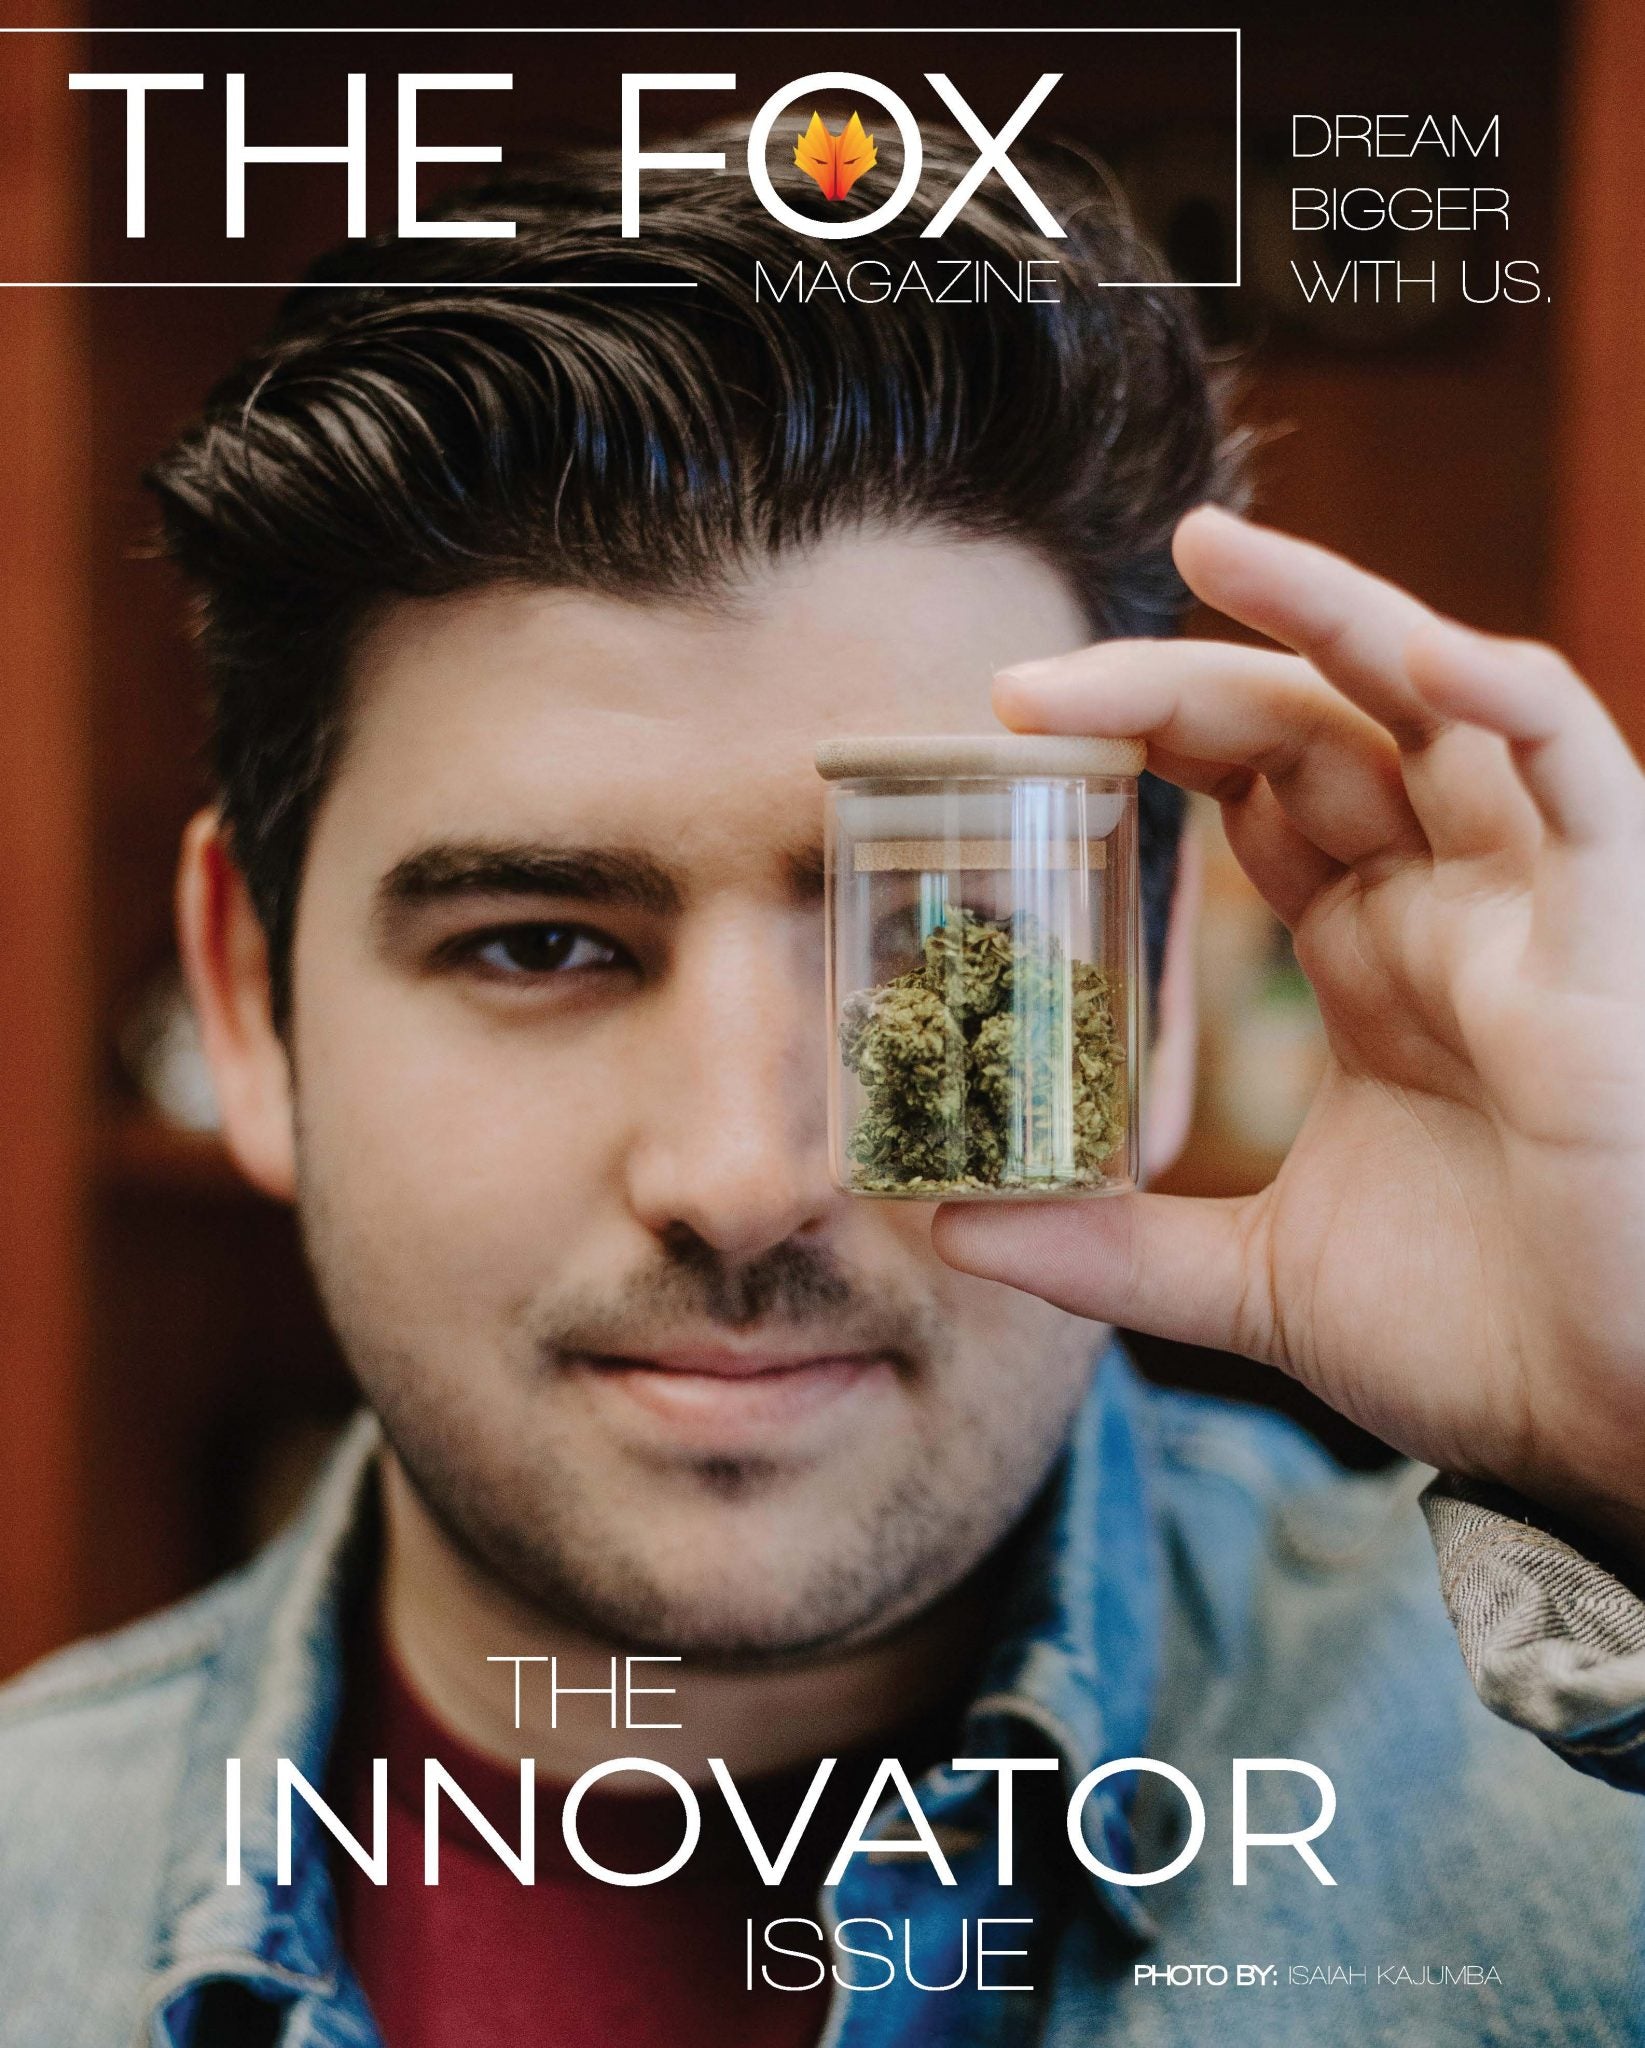 The Innovator Issue - Print - The Fox Magazine